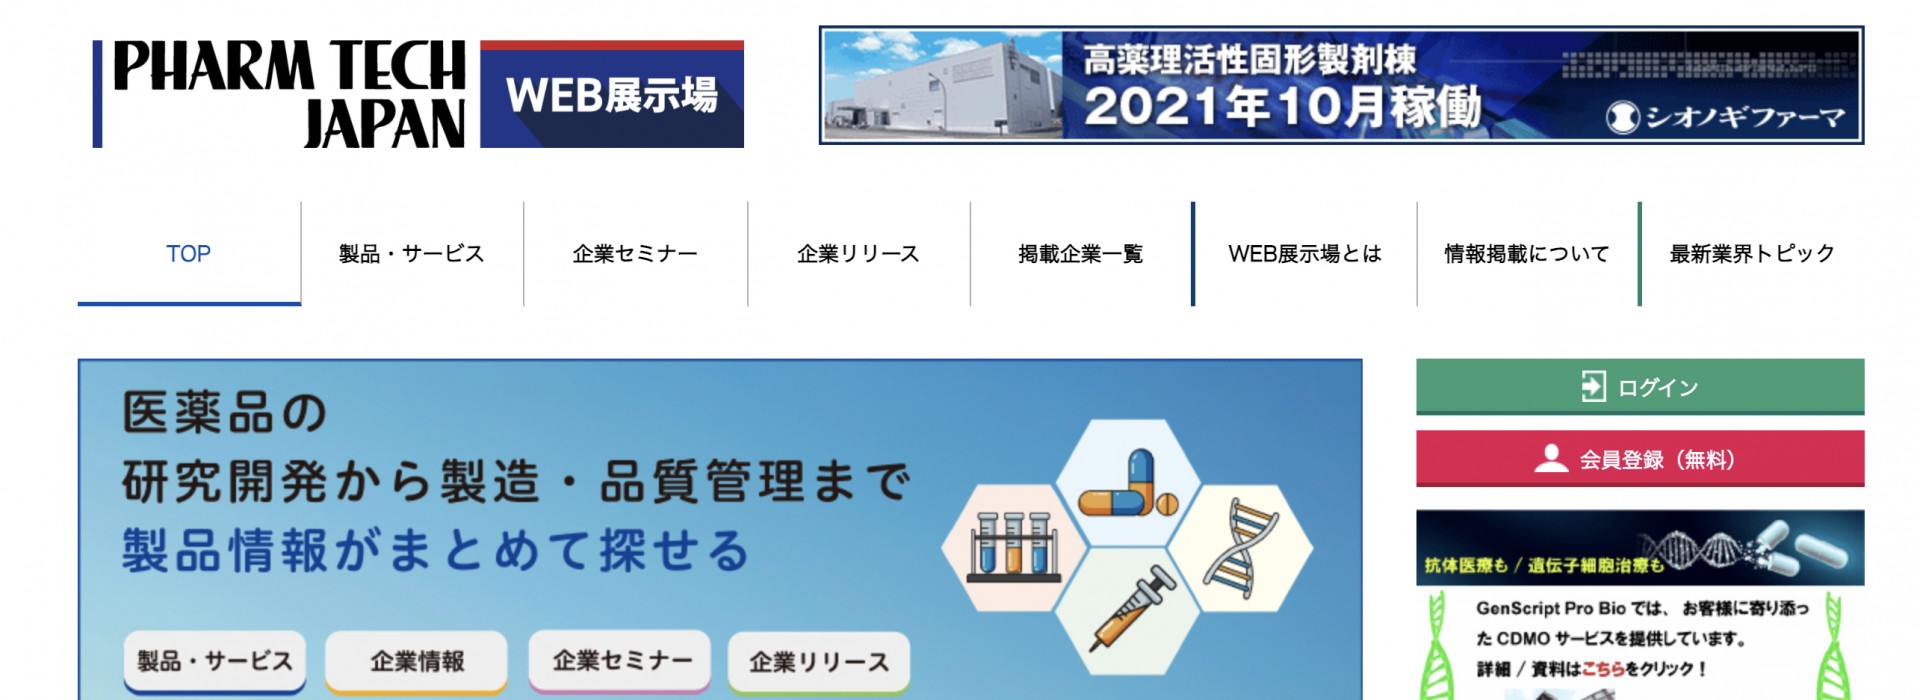 Dara Pharma takes part in Pharma Tech Japan latest issue